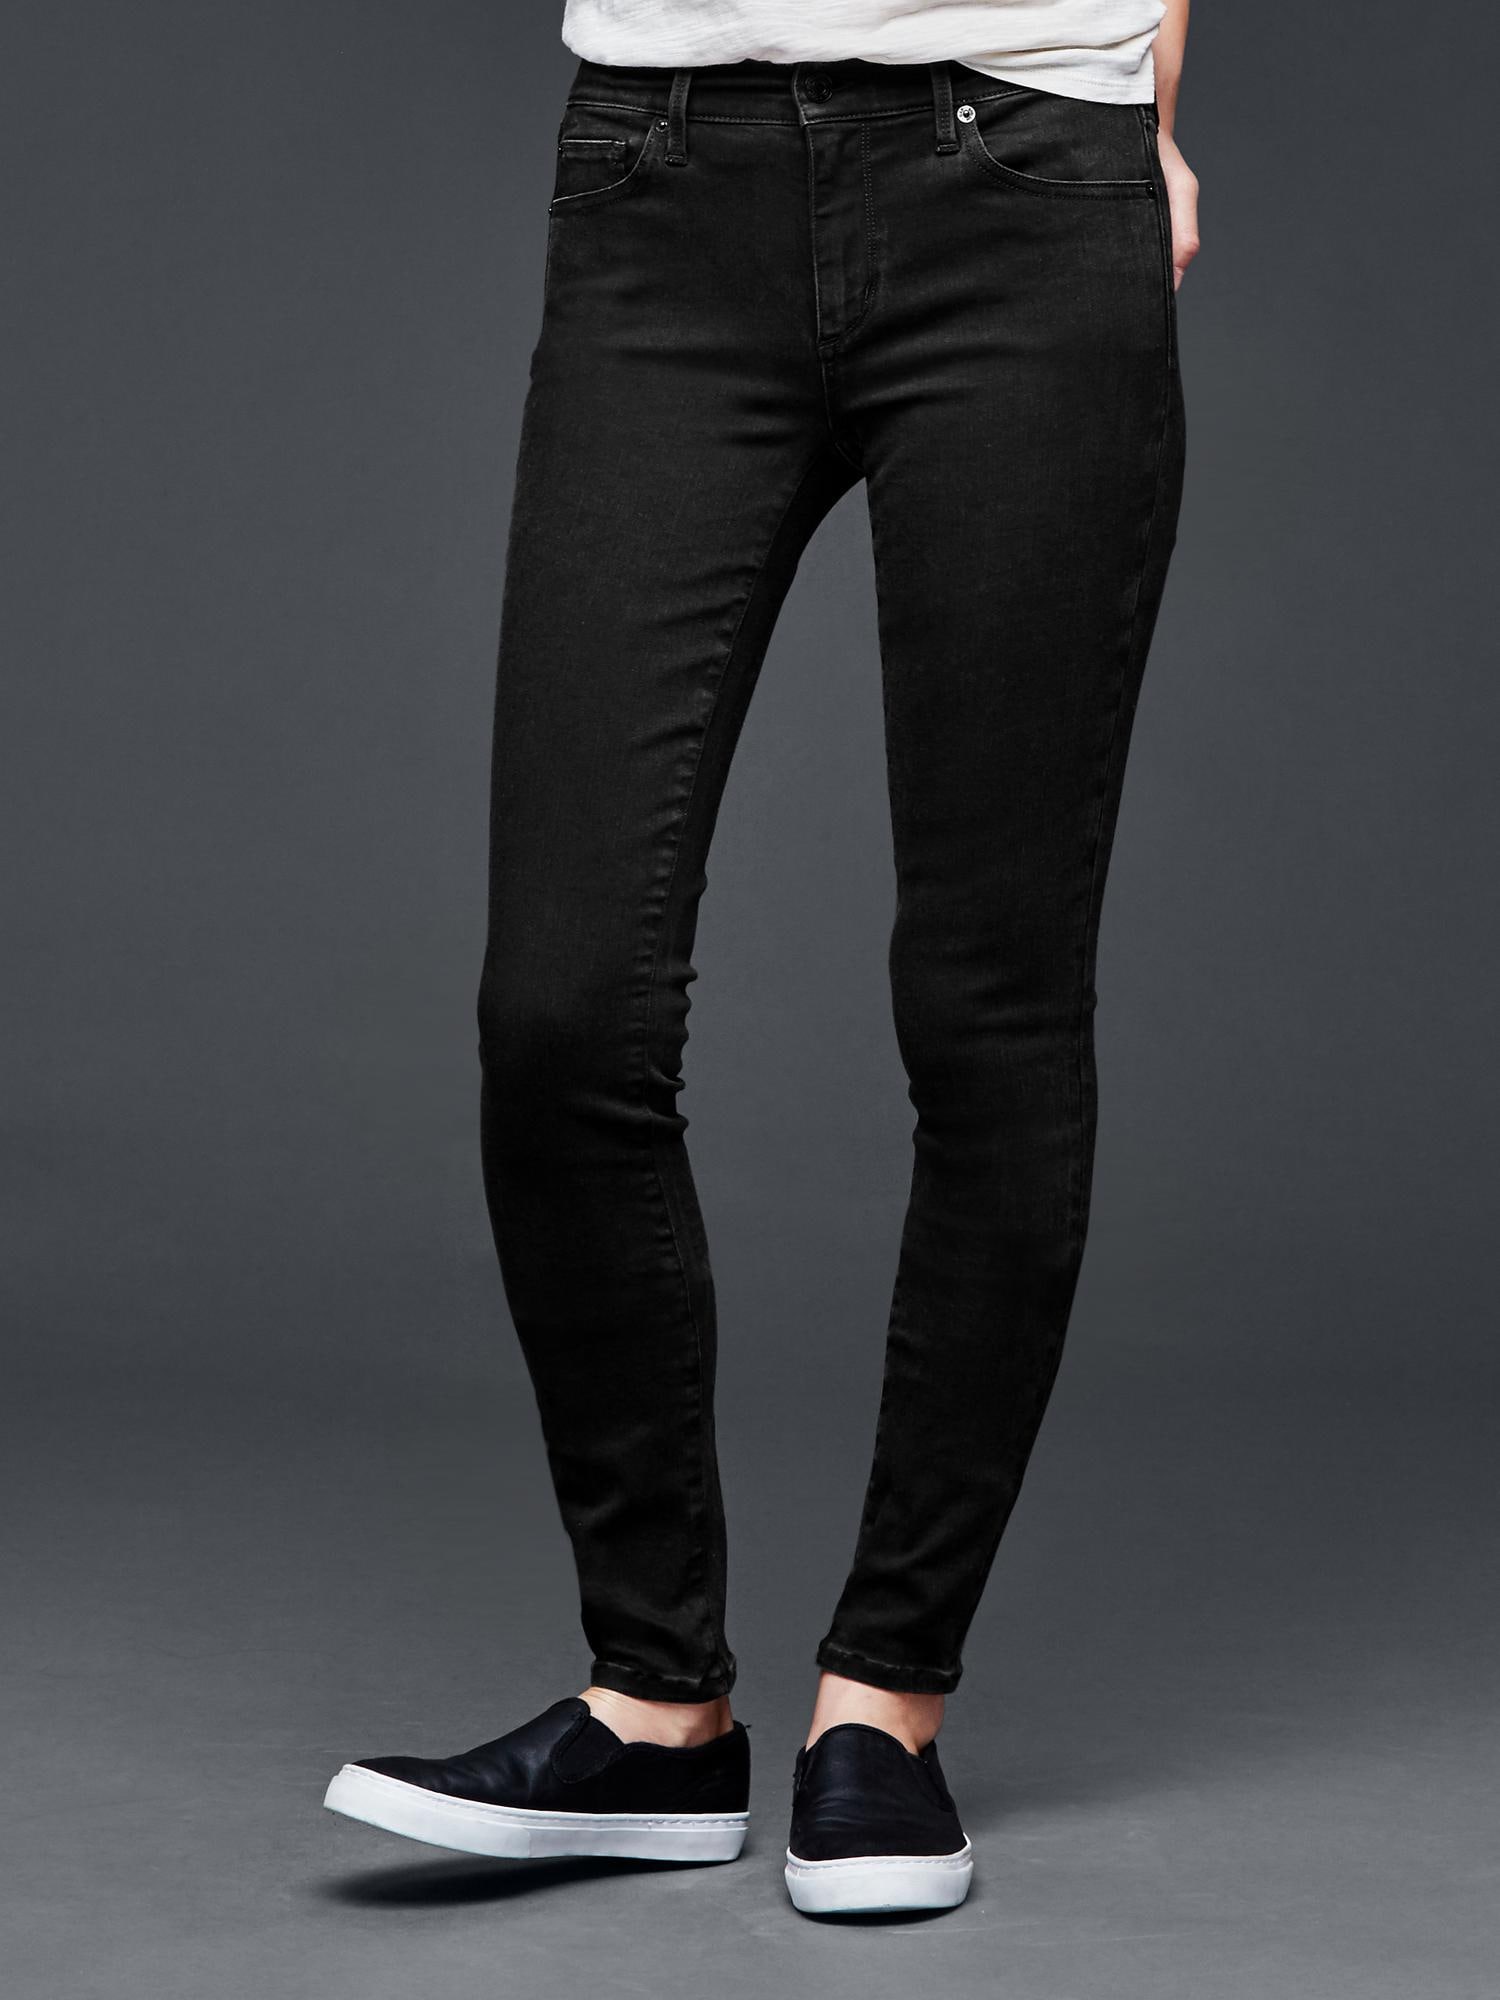 Mid rise true skinny jeans | Gap